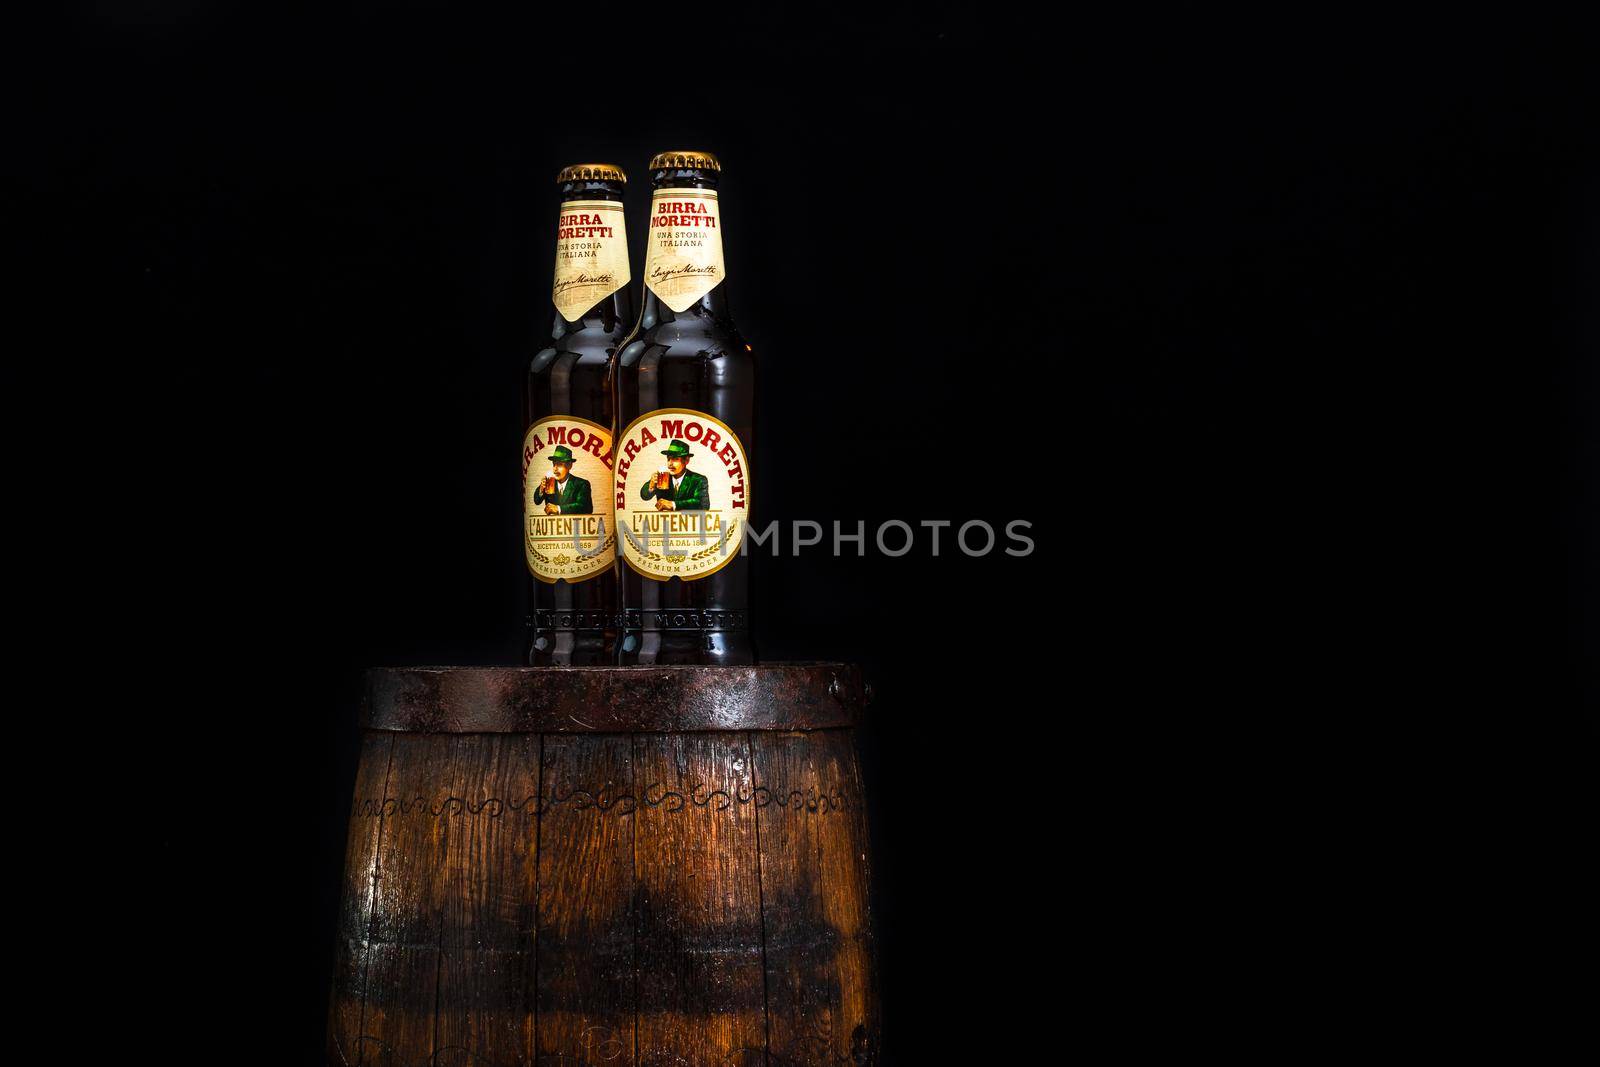 Bottle of Birra Moretti beer on wooden barrel with dark background. Illustrative editorial photo Bucharest, Romania, 2021 by vladispas